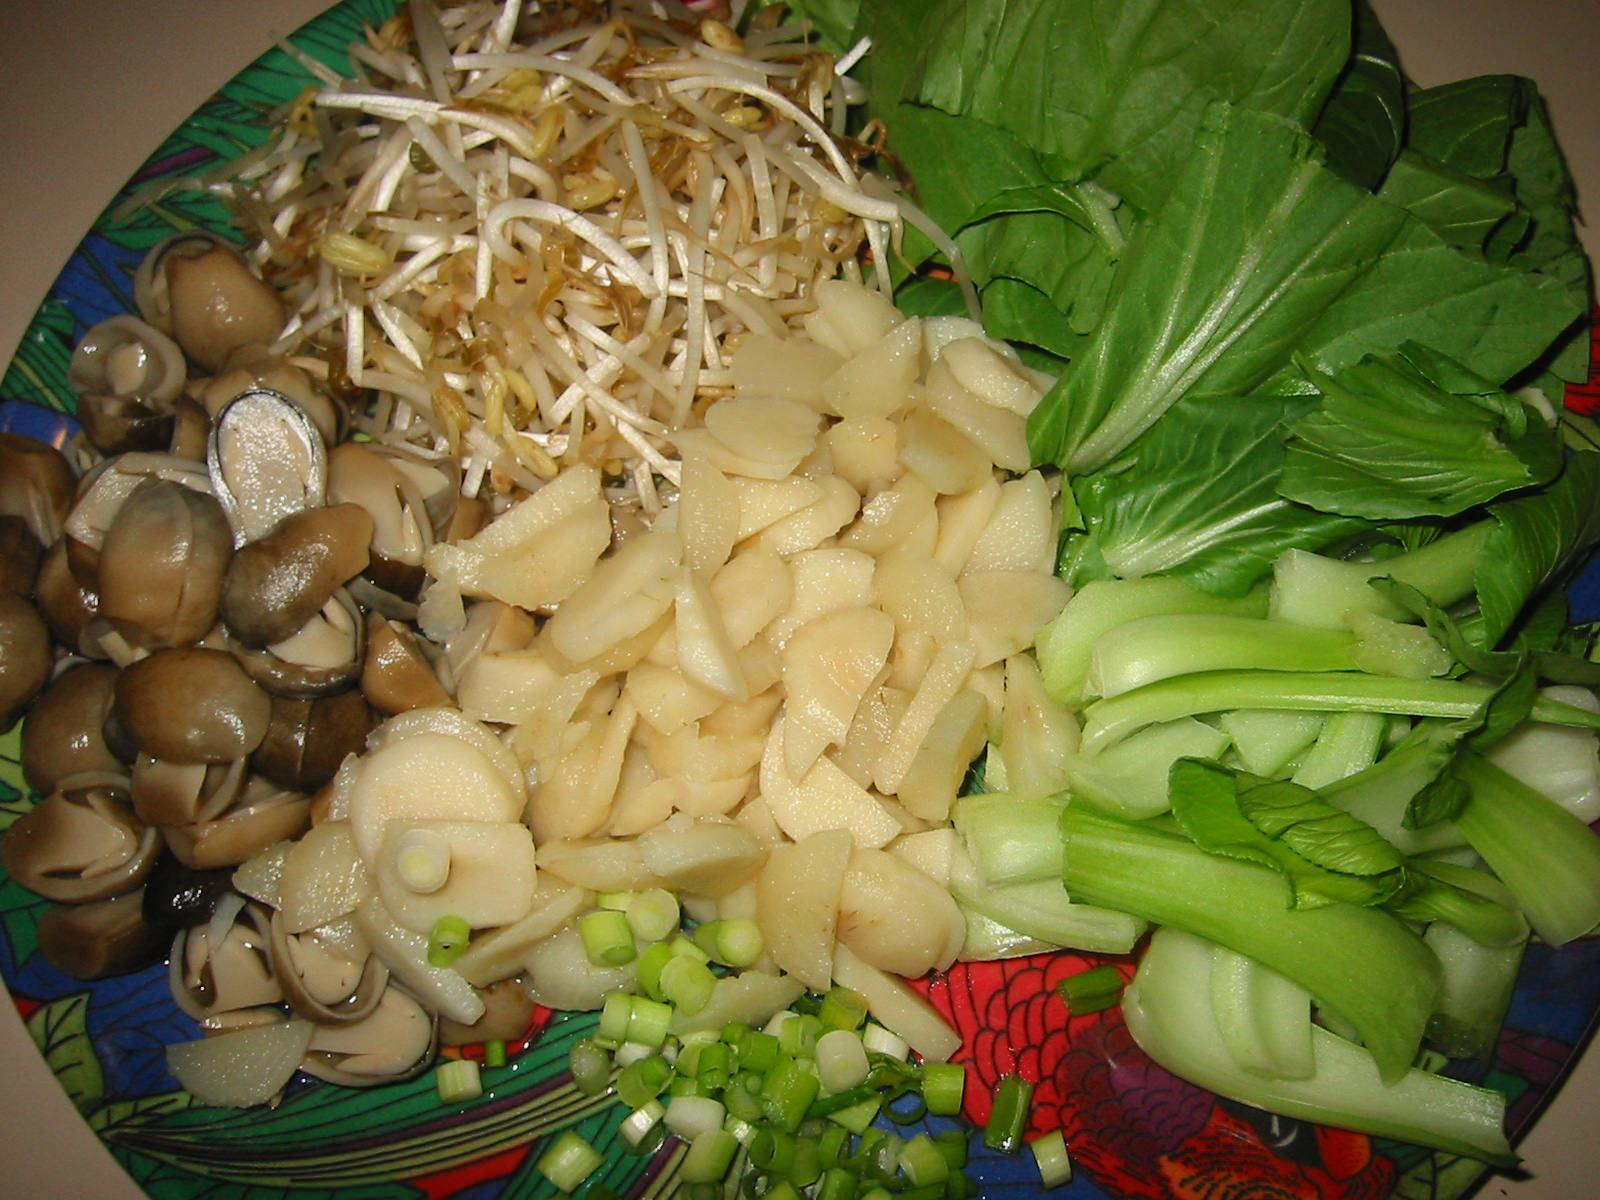 Bits and pieces for noodle soup